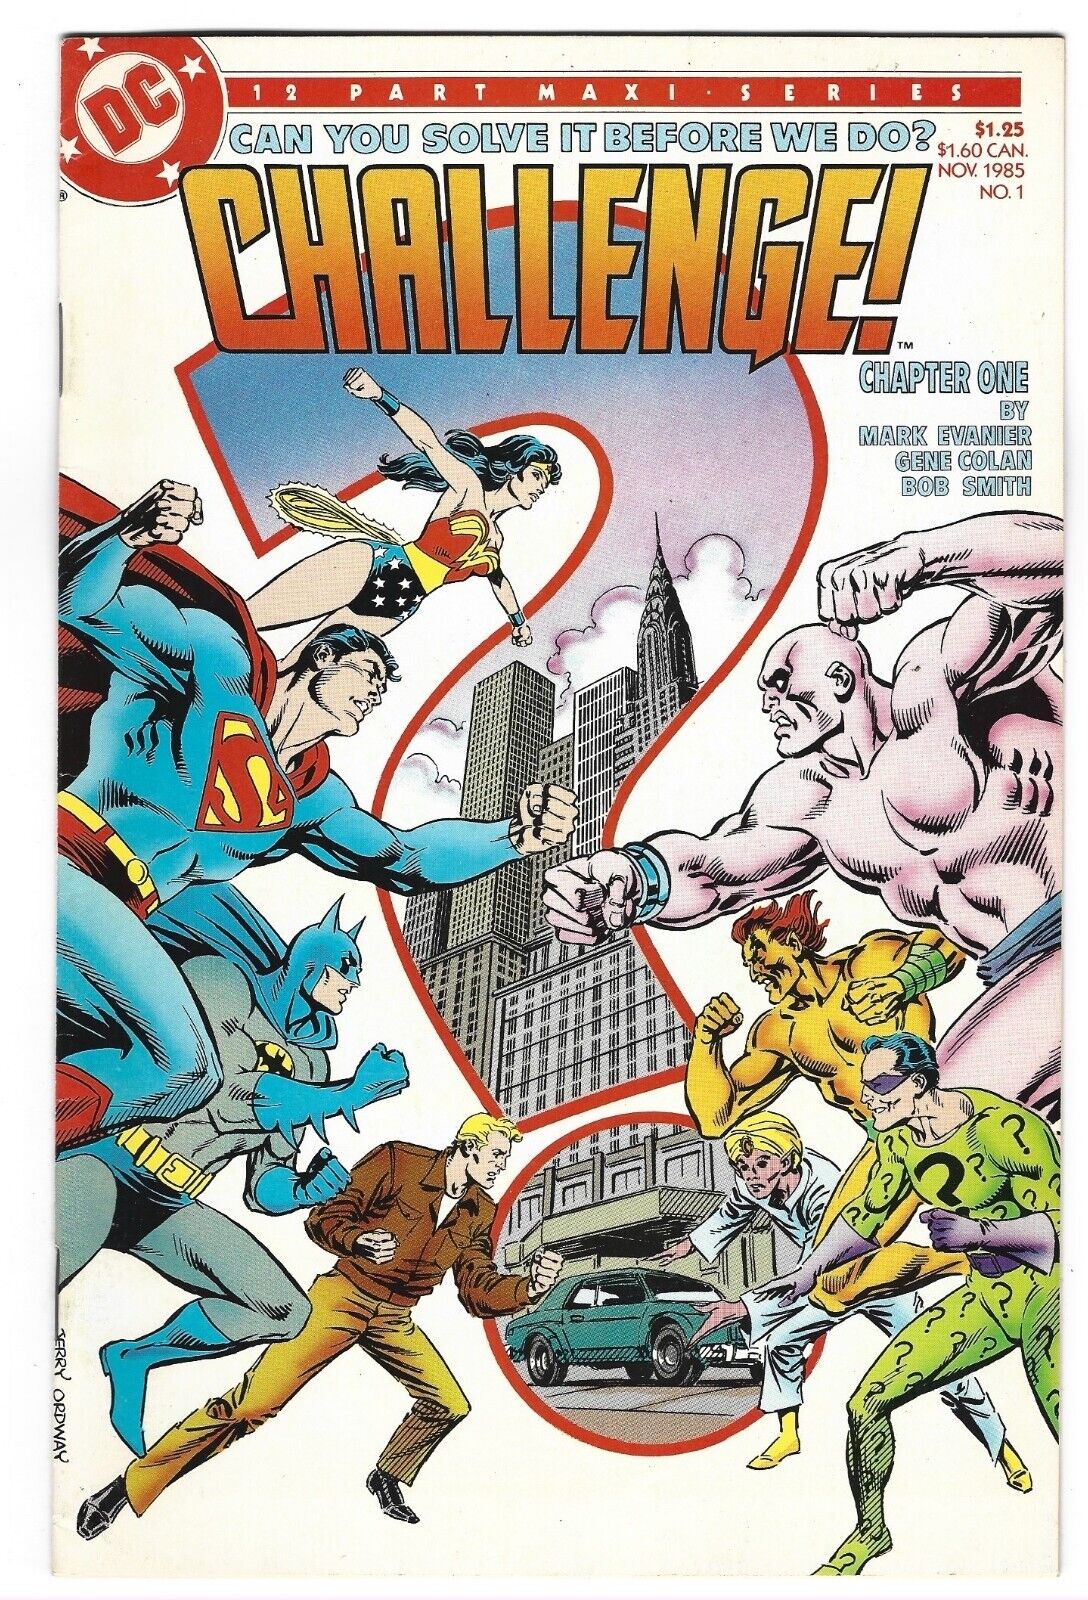 DC Challenge #1 1985 DC Comics